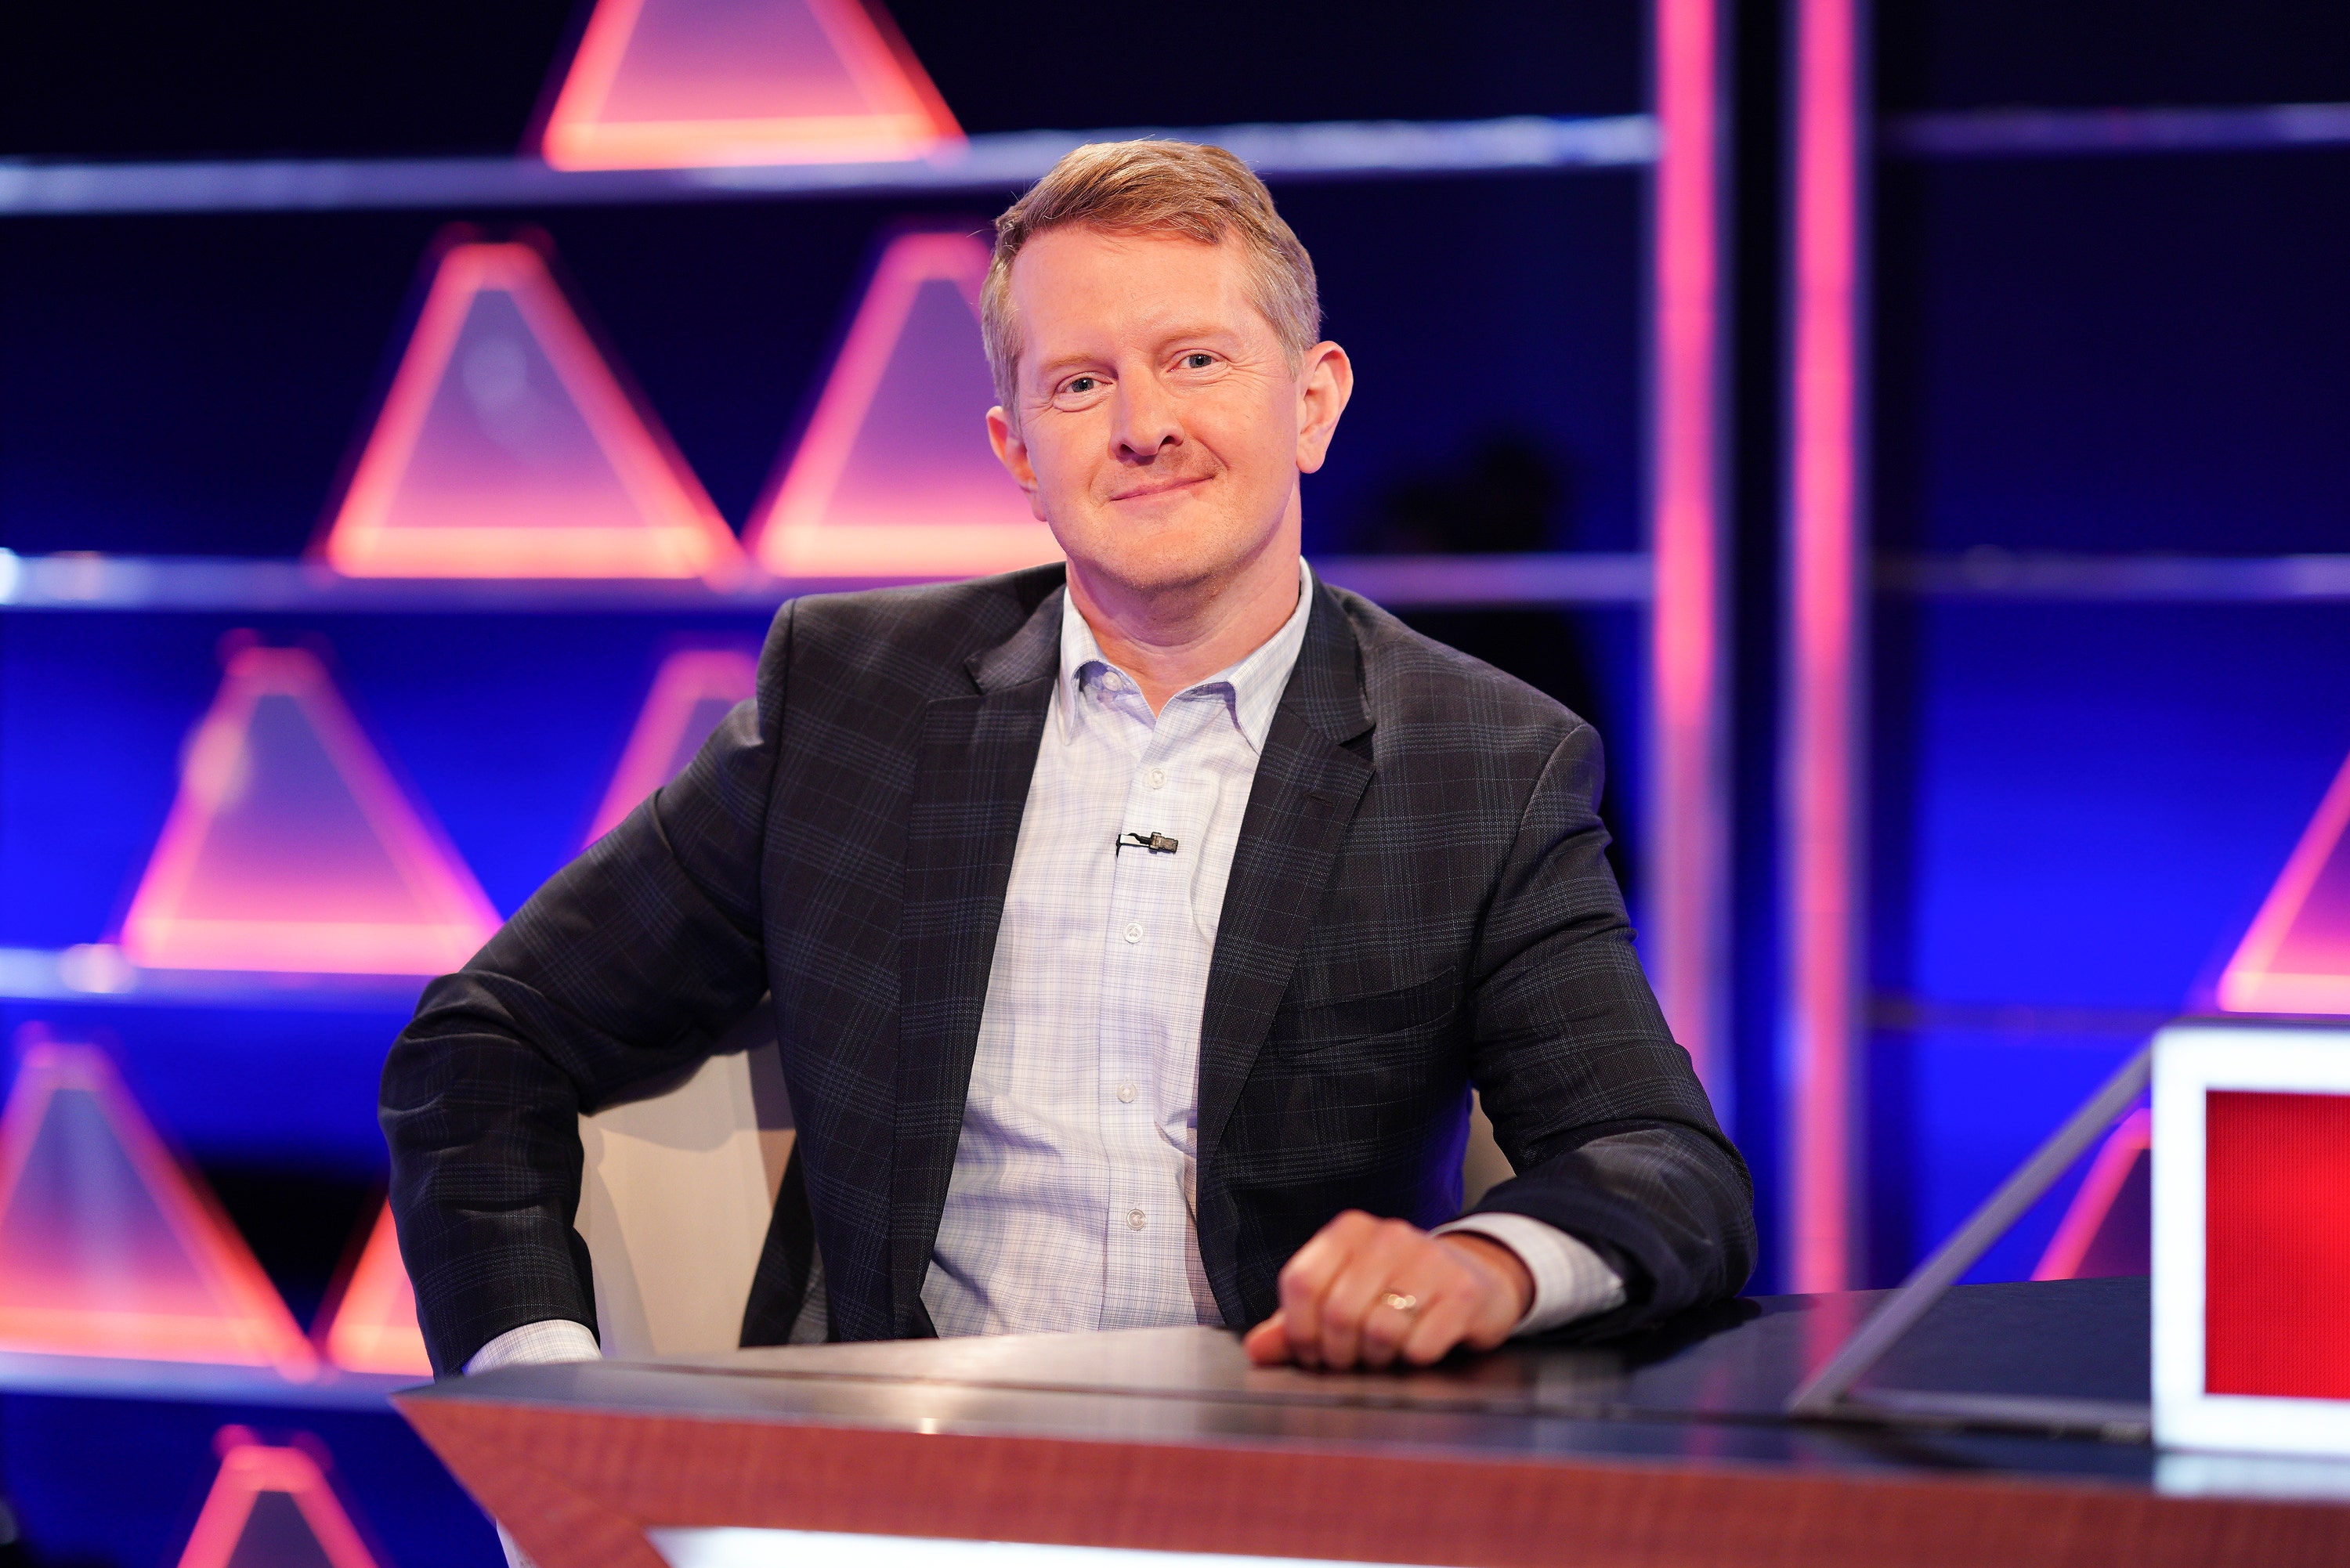 ‘Jeopardy!’ host Ken Jennings leaves fans baffled as he loses game show